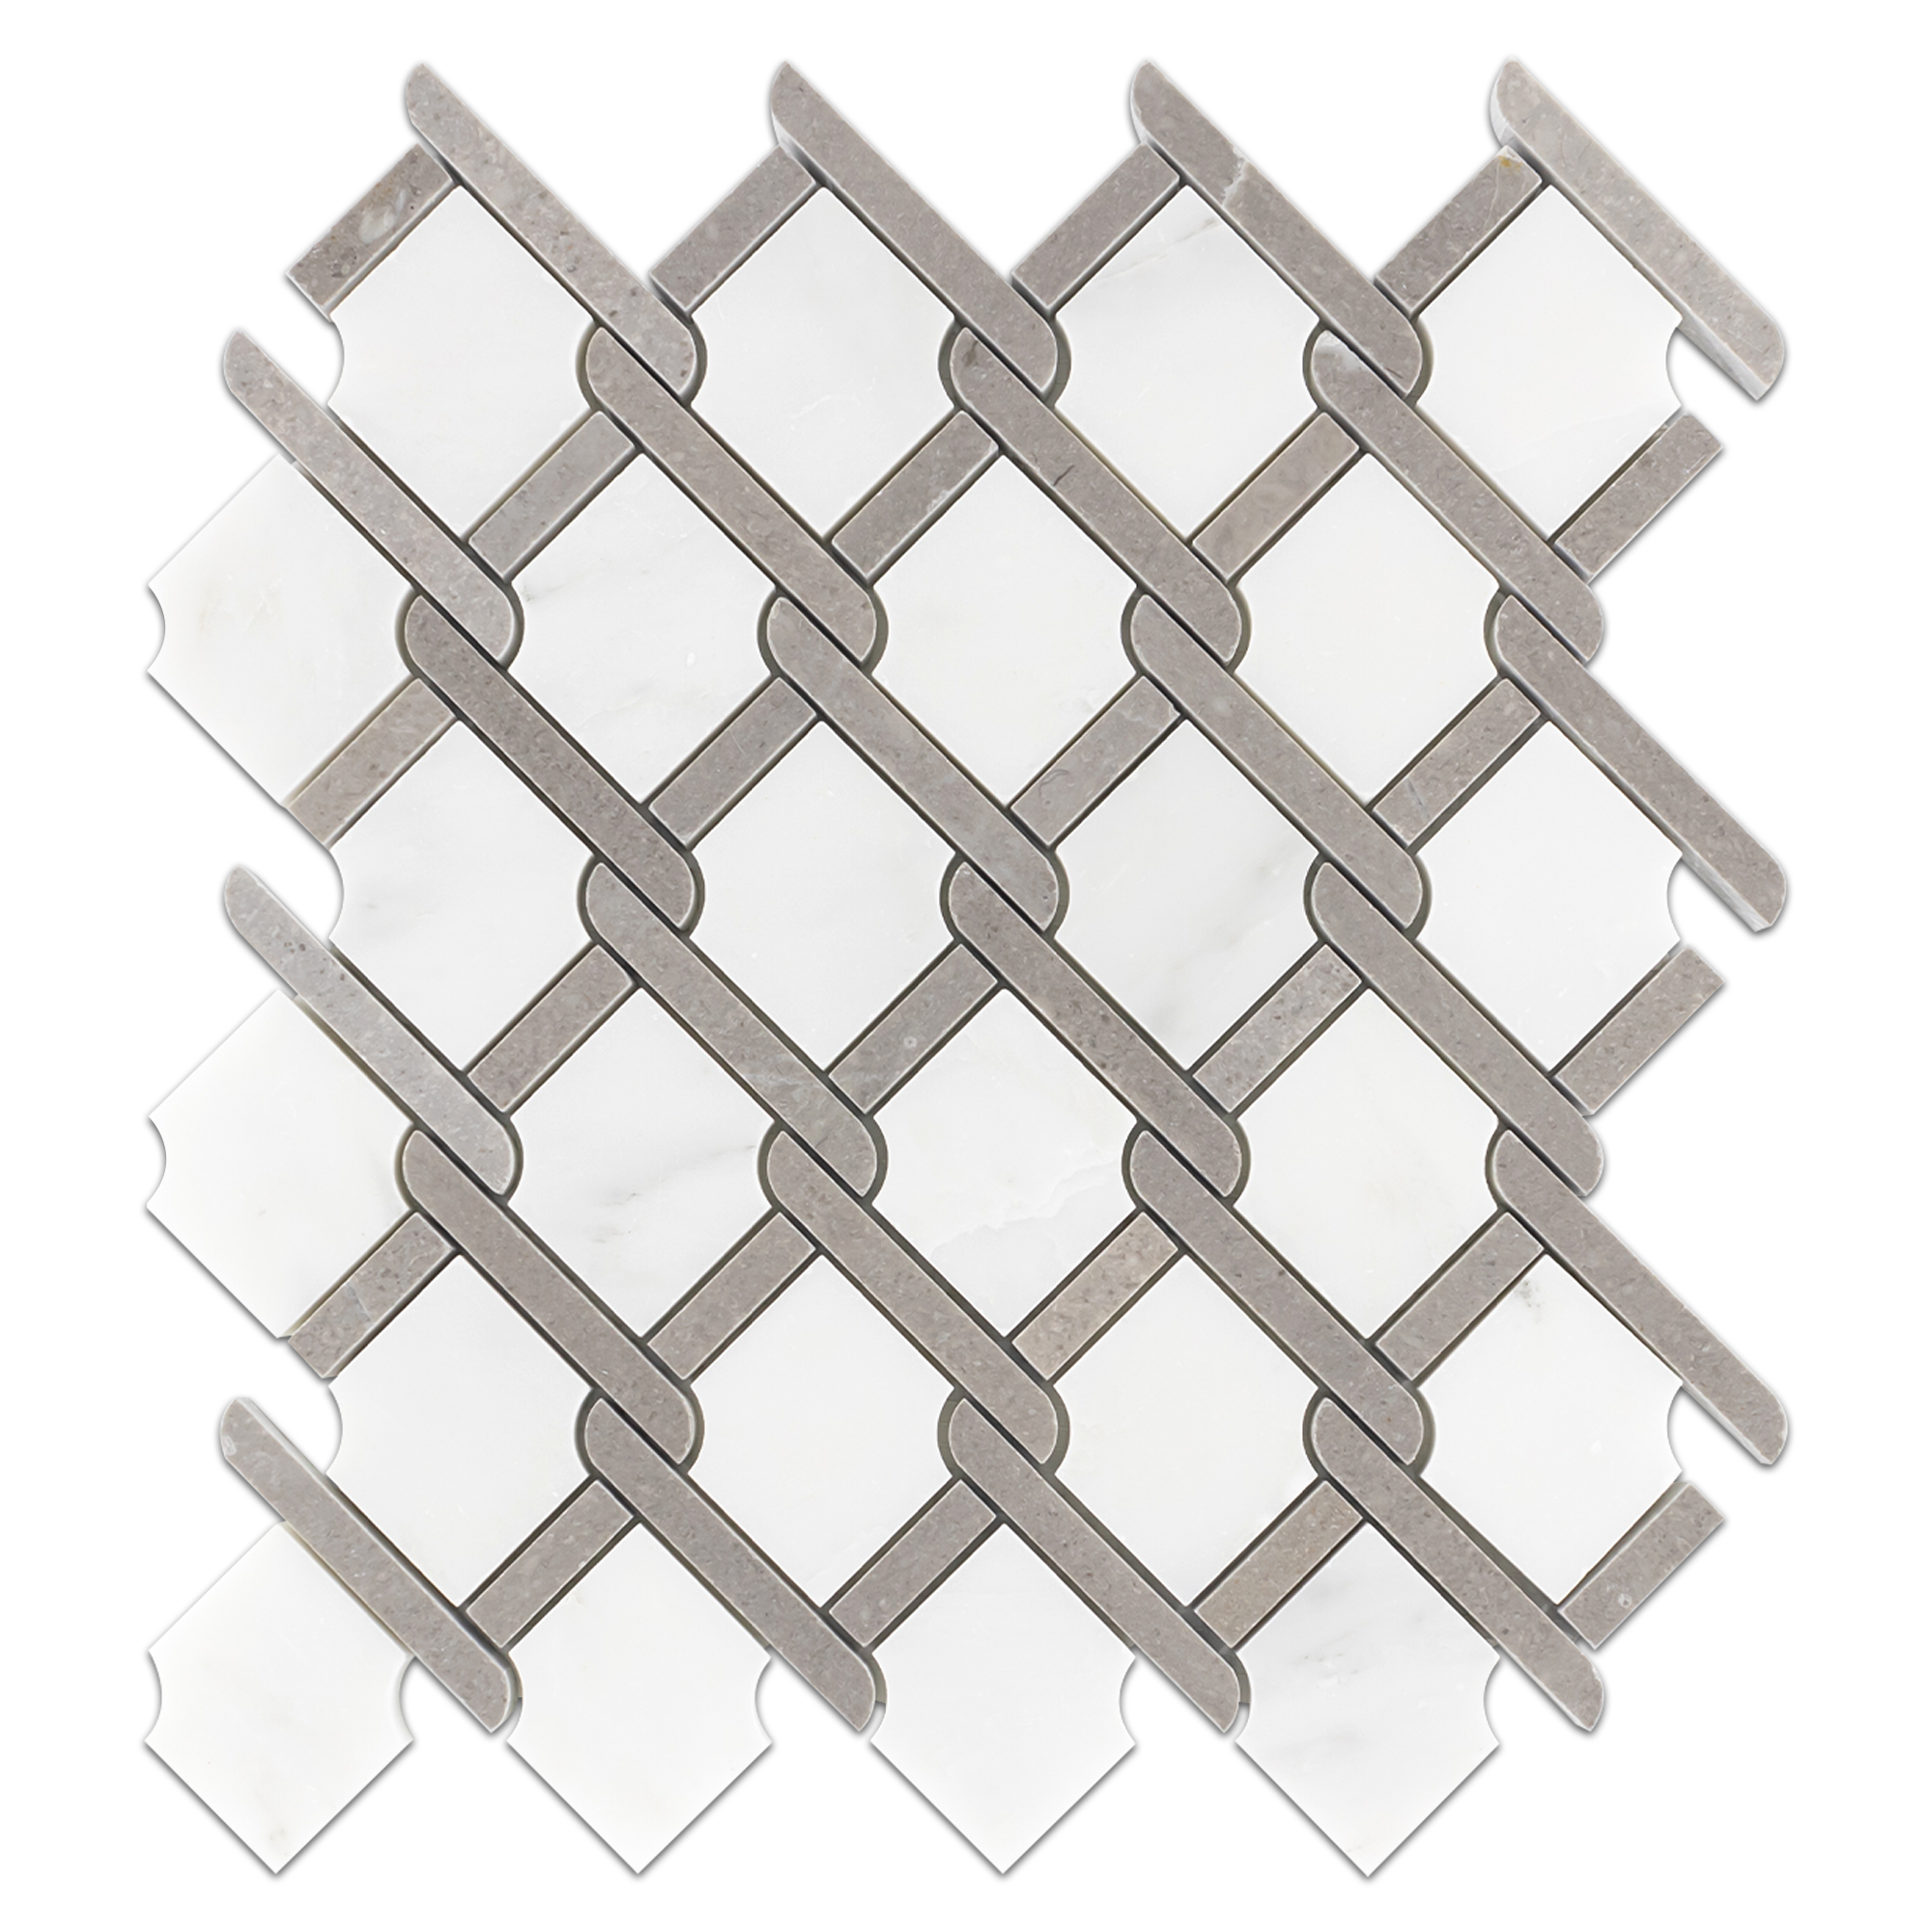 Elon Sand Dollar Marble Argyle Field Mosaic 11x12x0.375 Polished Tile - Surface Group International Product